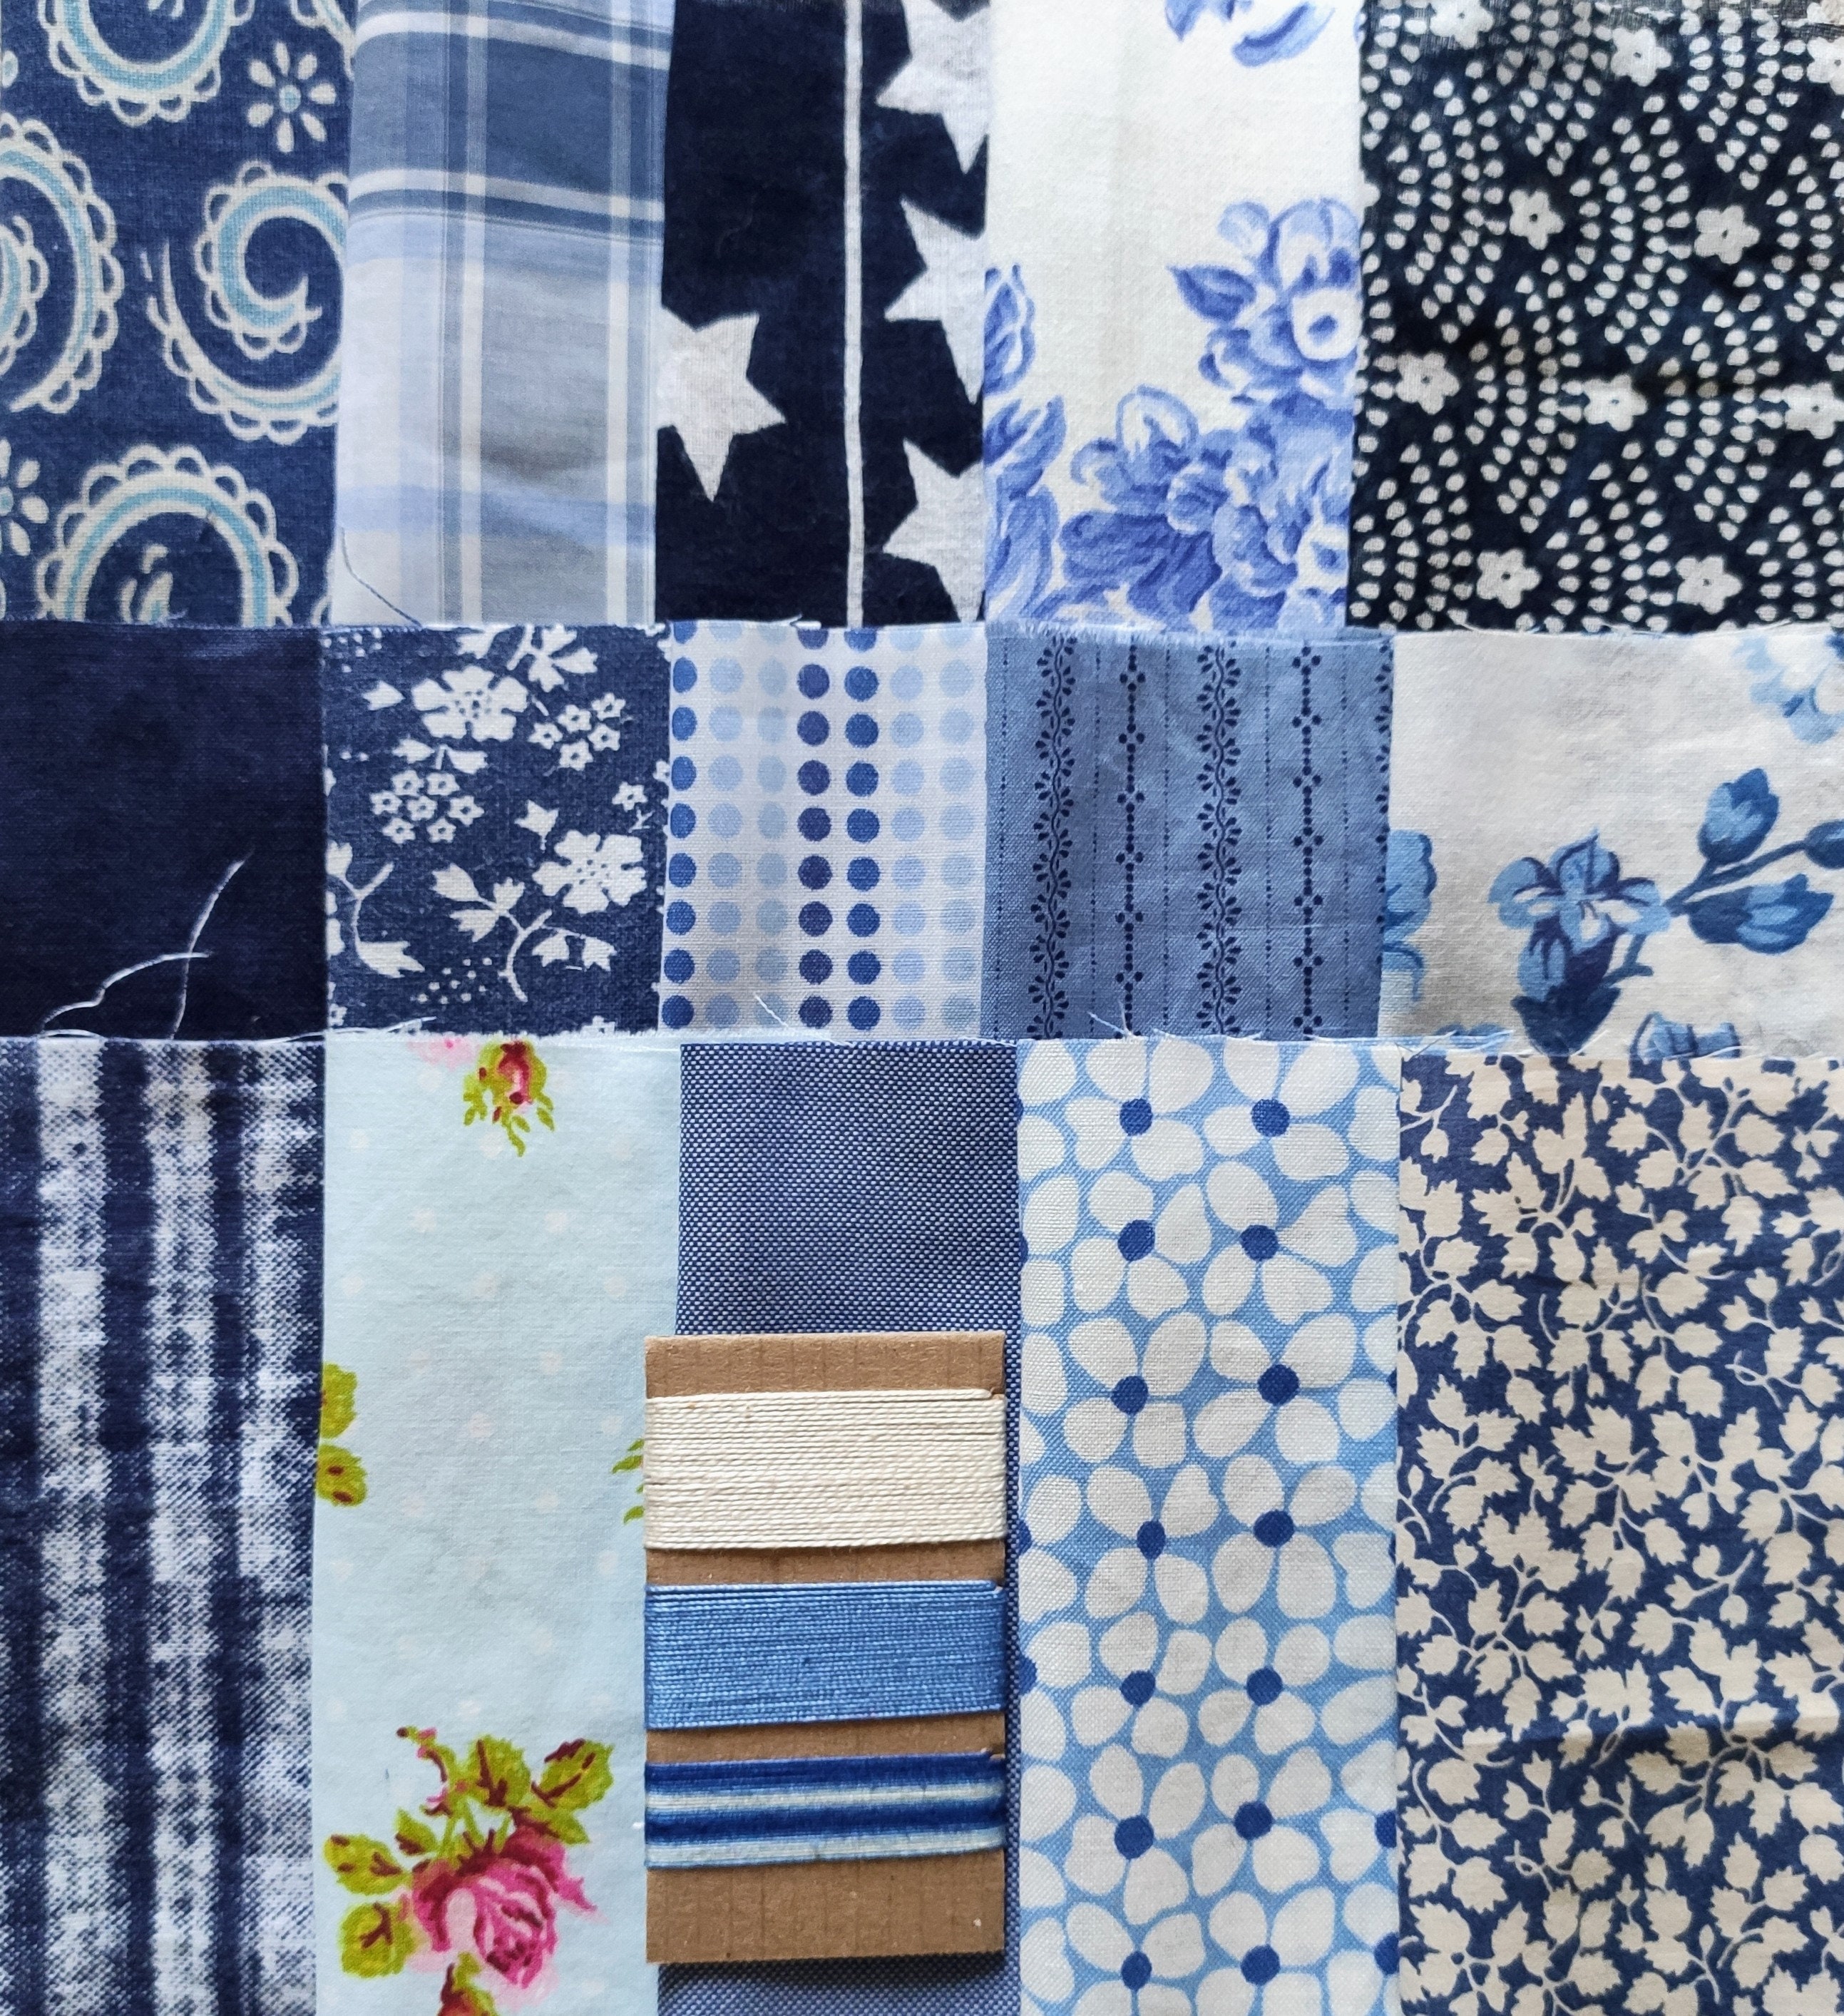 Sashiko Starter Kit - Blue – The Slow Sewing Shop